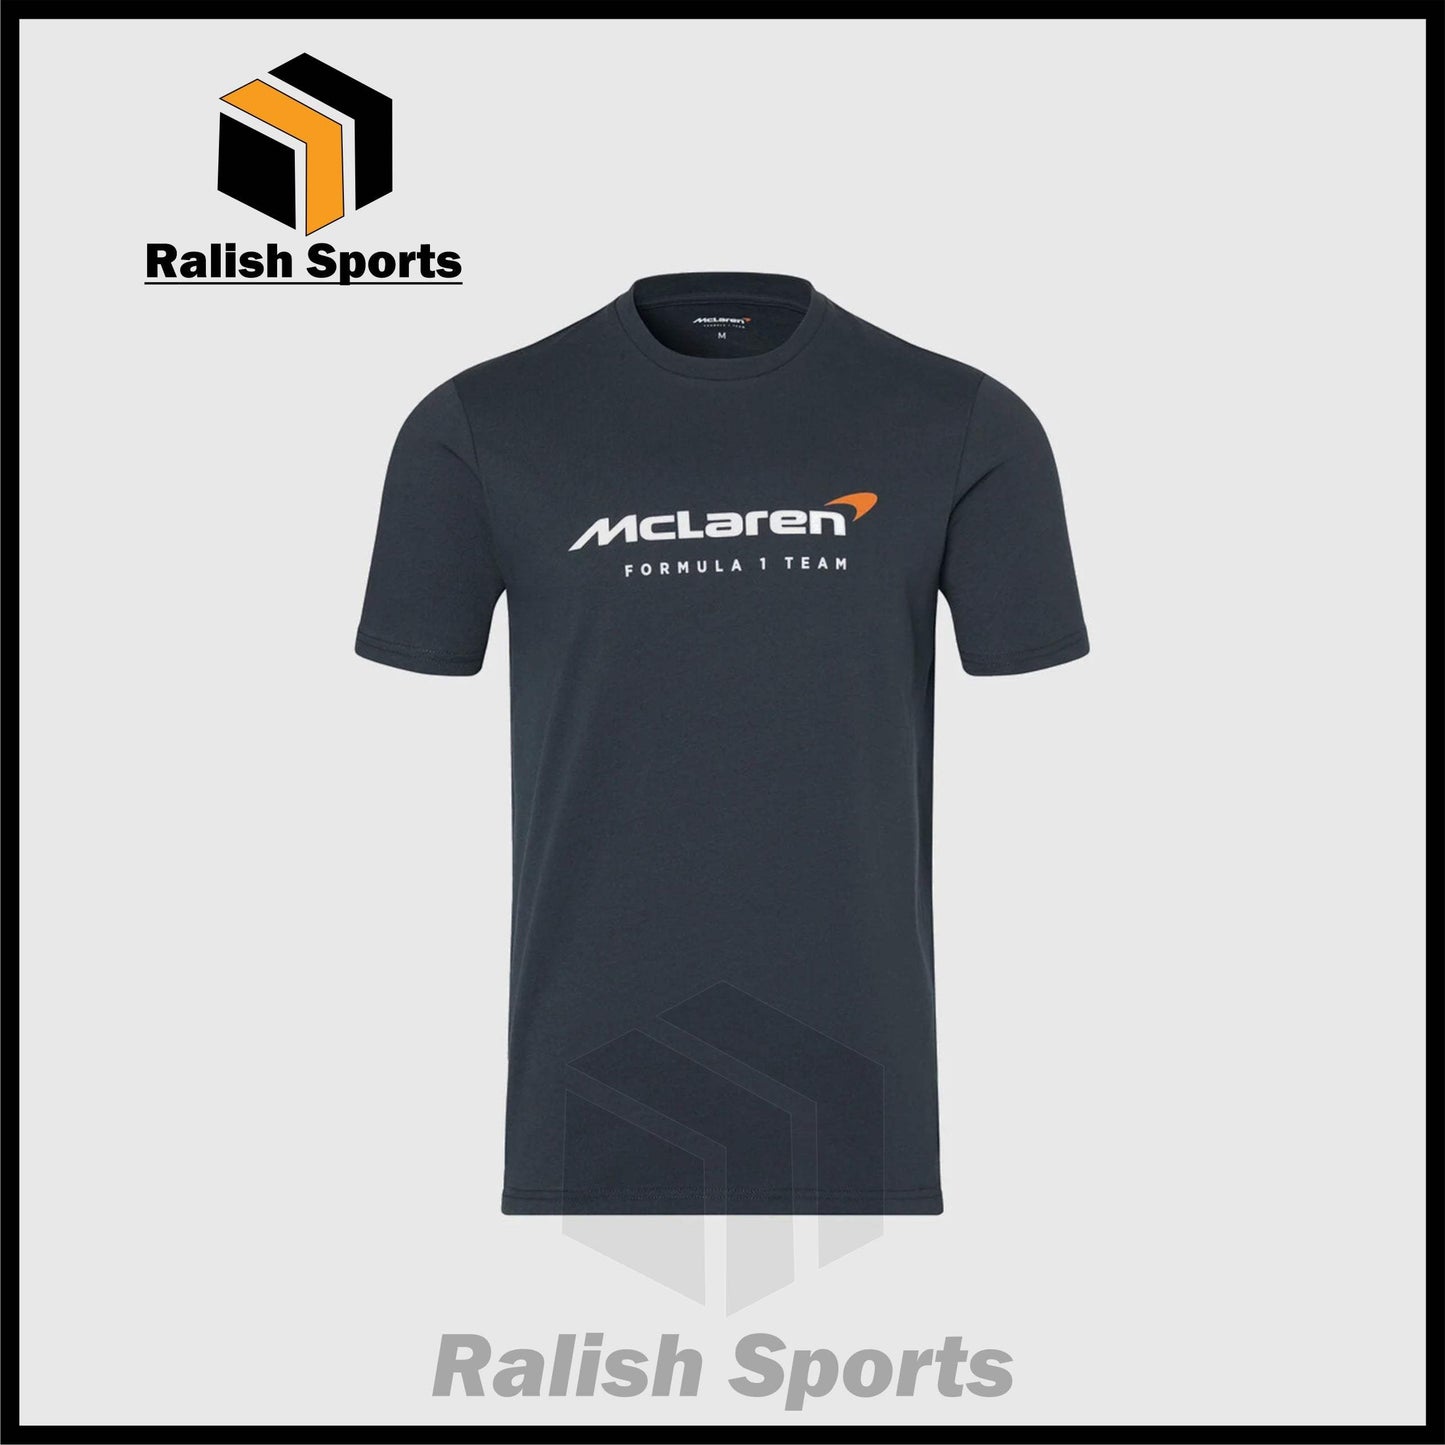 McLaren F1 Core Essentials T-shirt - Ralish Sports